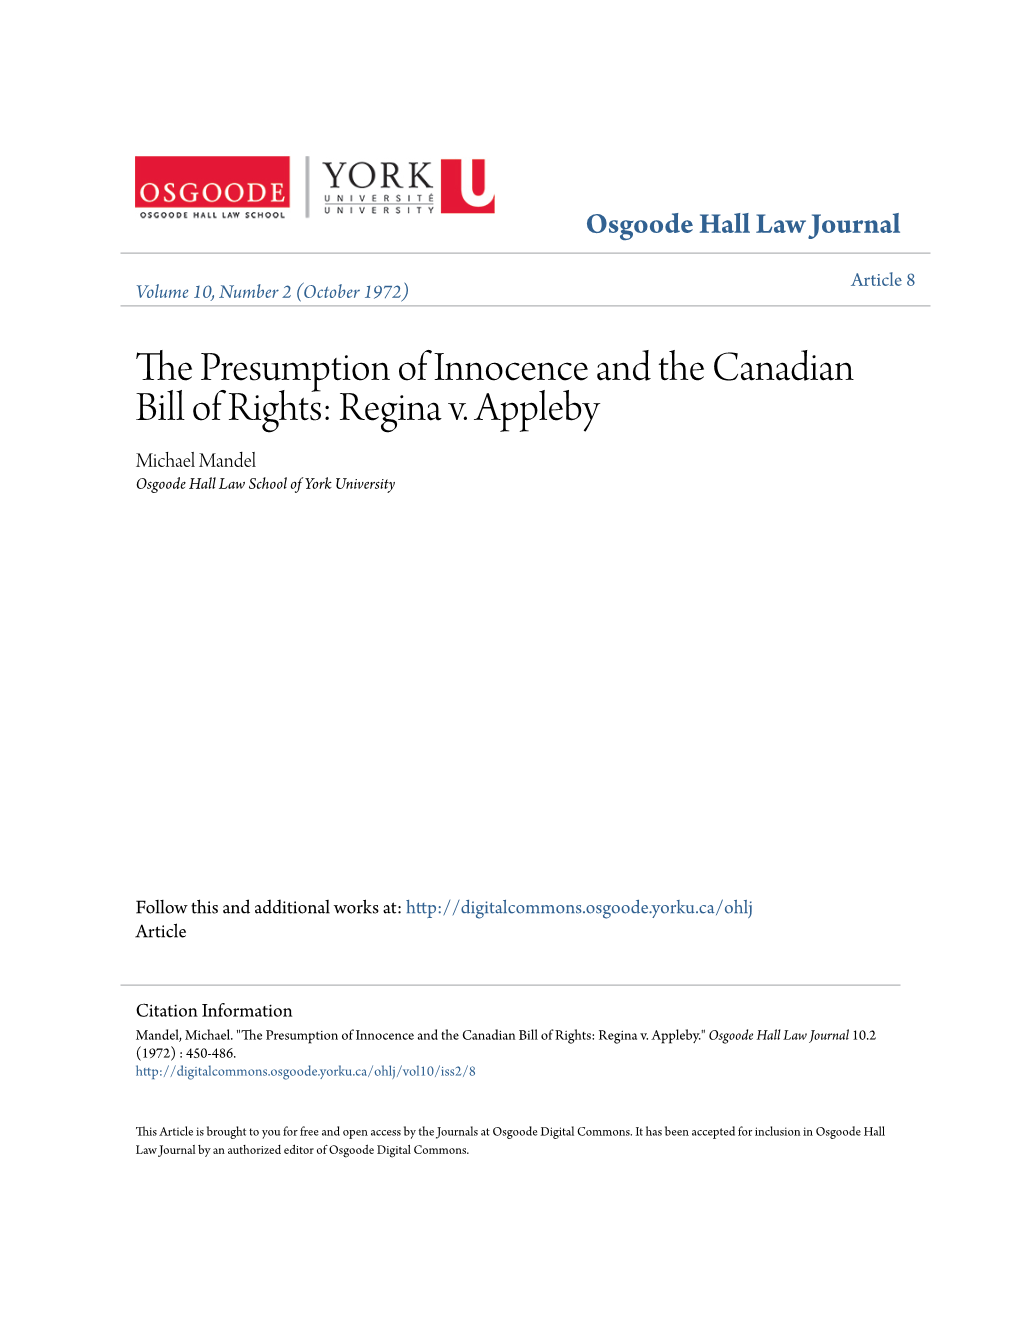 The Presumption of Innocence and the Canadian Bill of Rights: Regina V